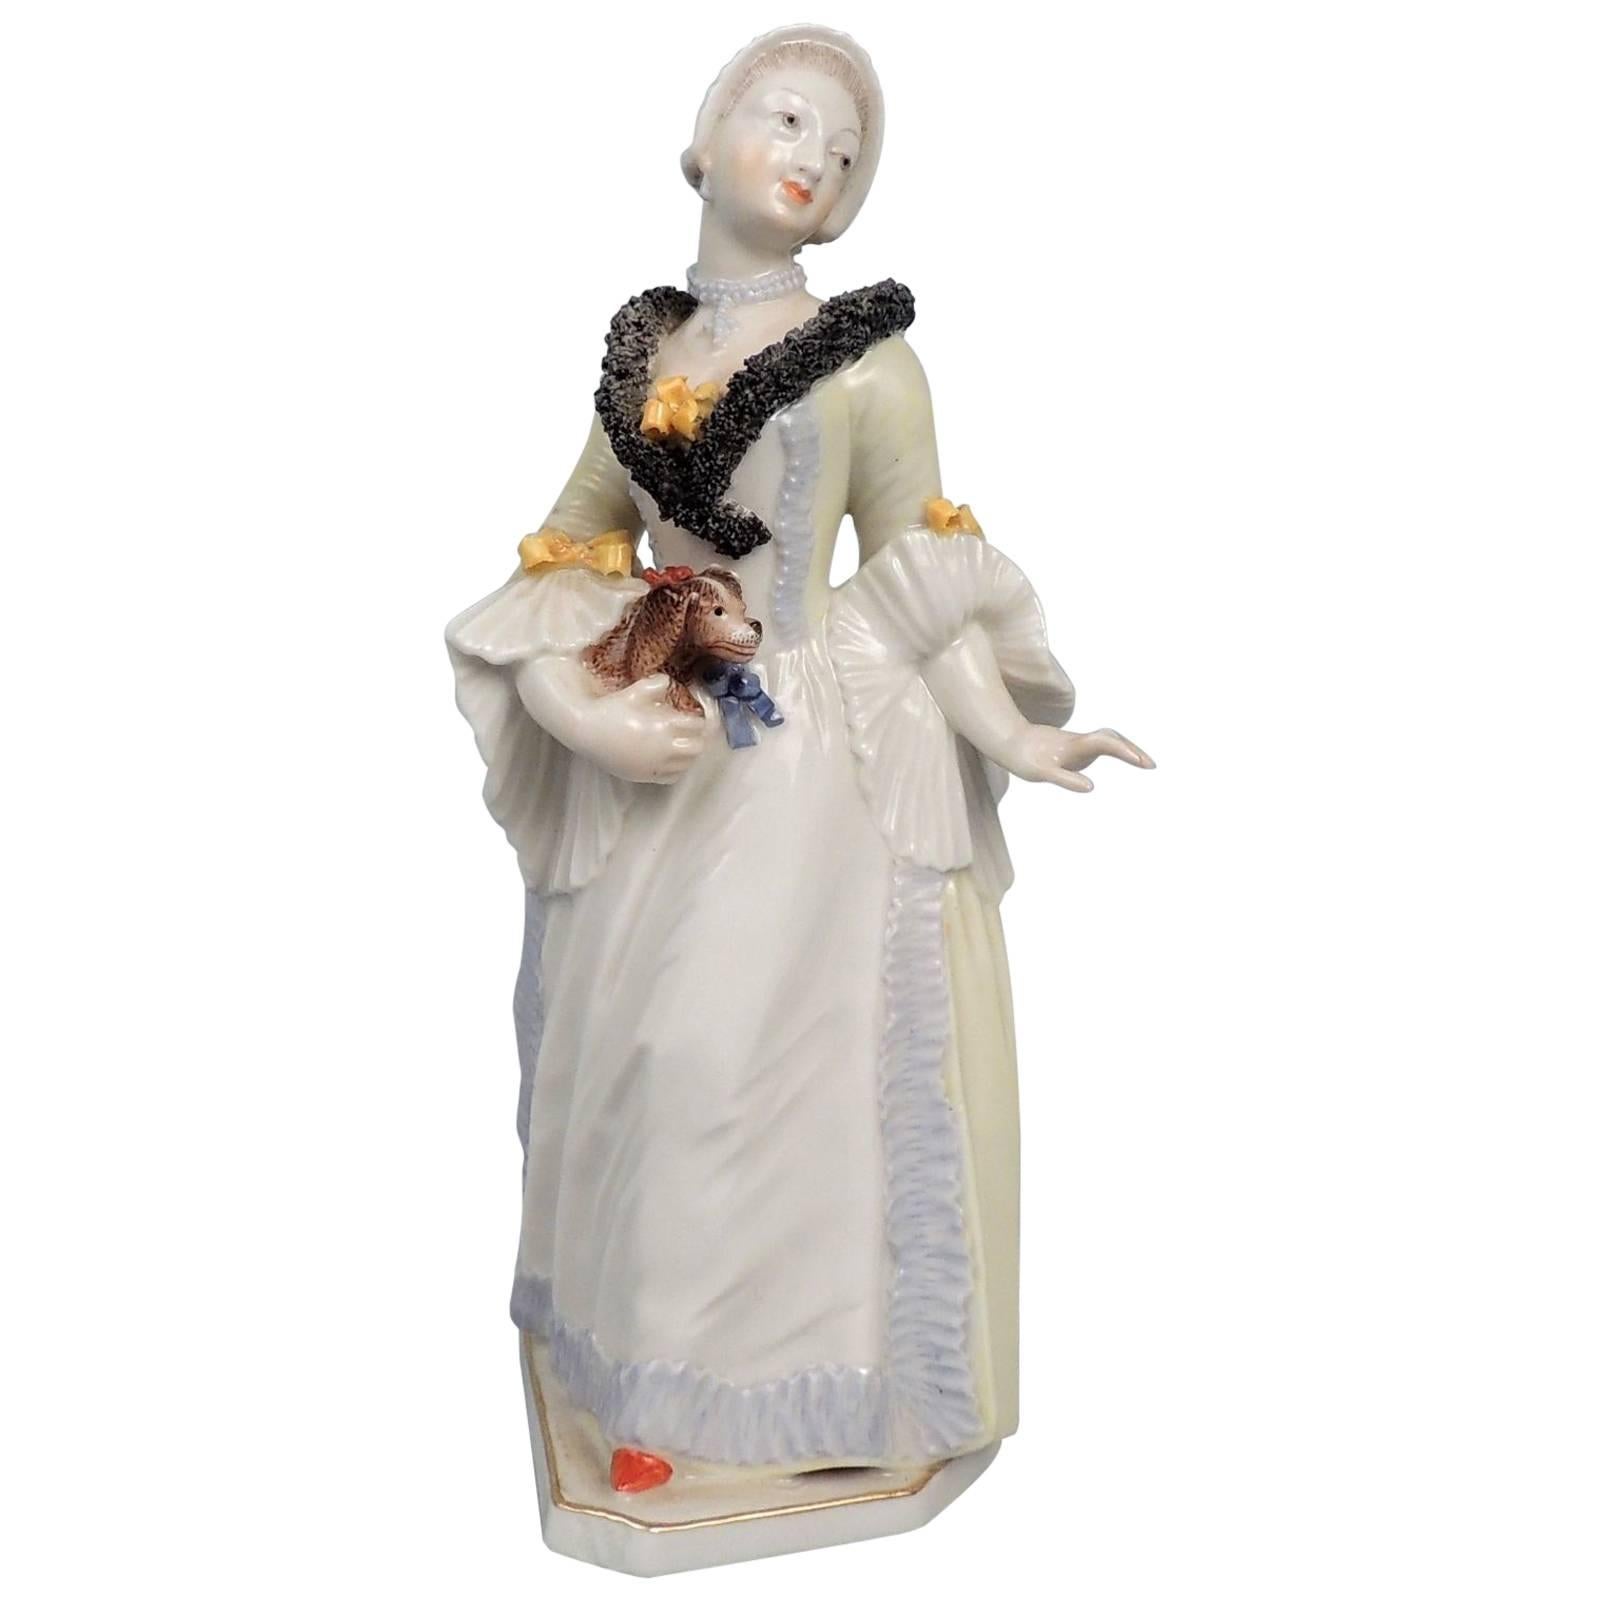 Nymphenburg Porcelain Bustelli Figurine of a Lady & a King Charles Spaniel Dog